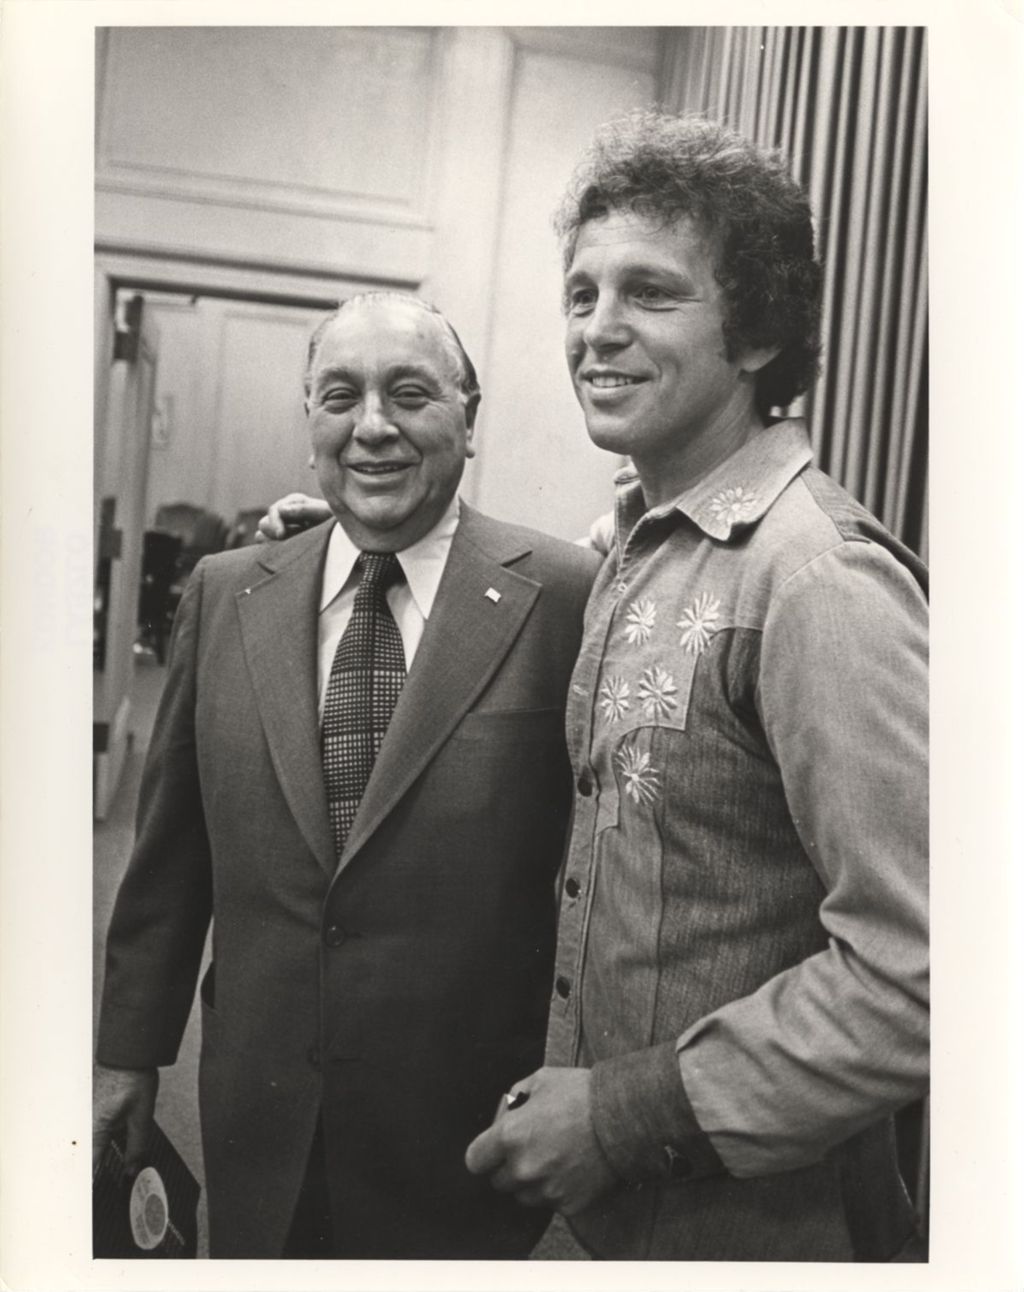 Miniature of Bobby Vinton and Mayor Richard J. Daley